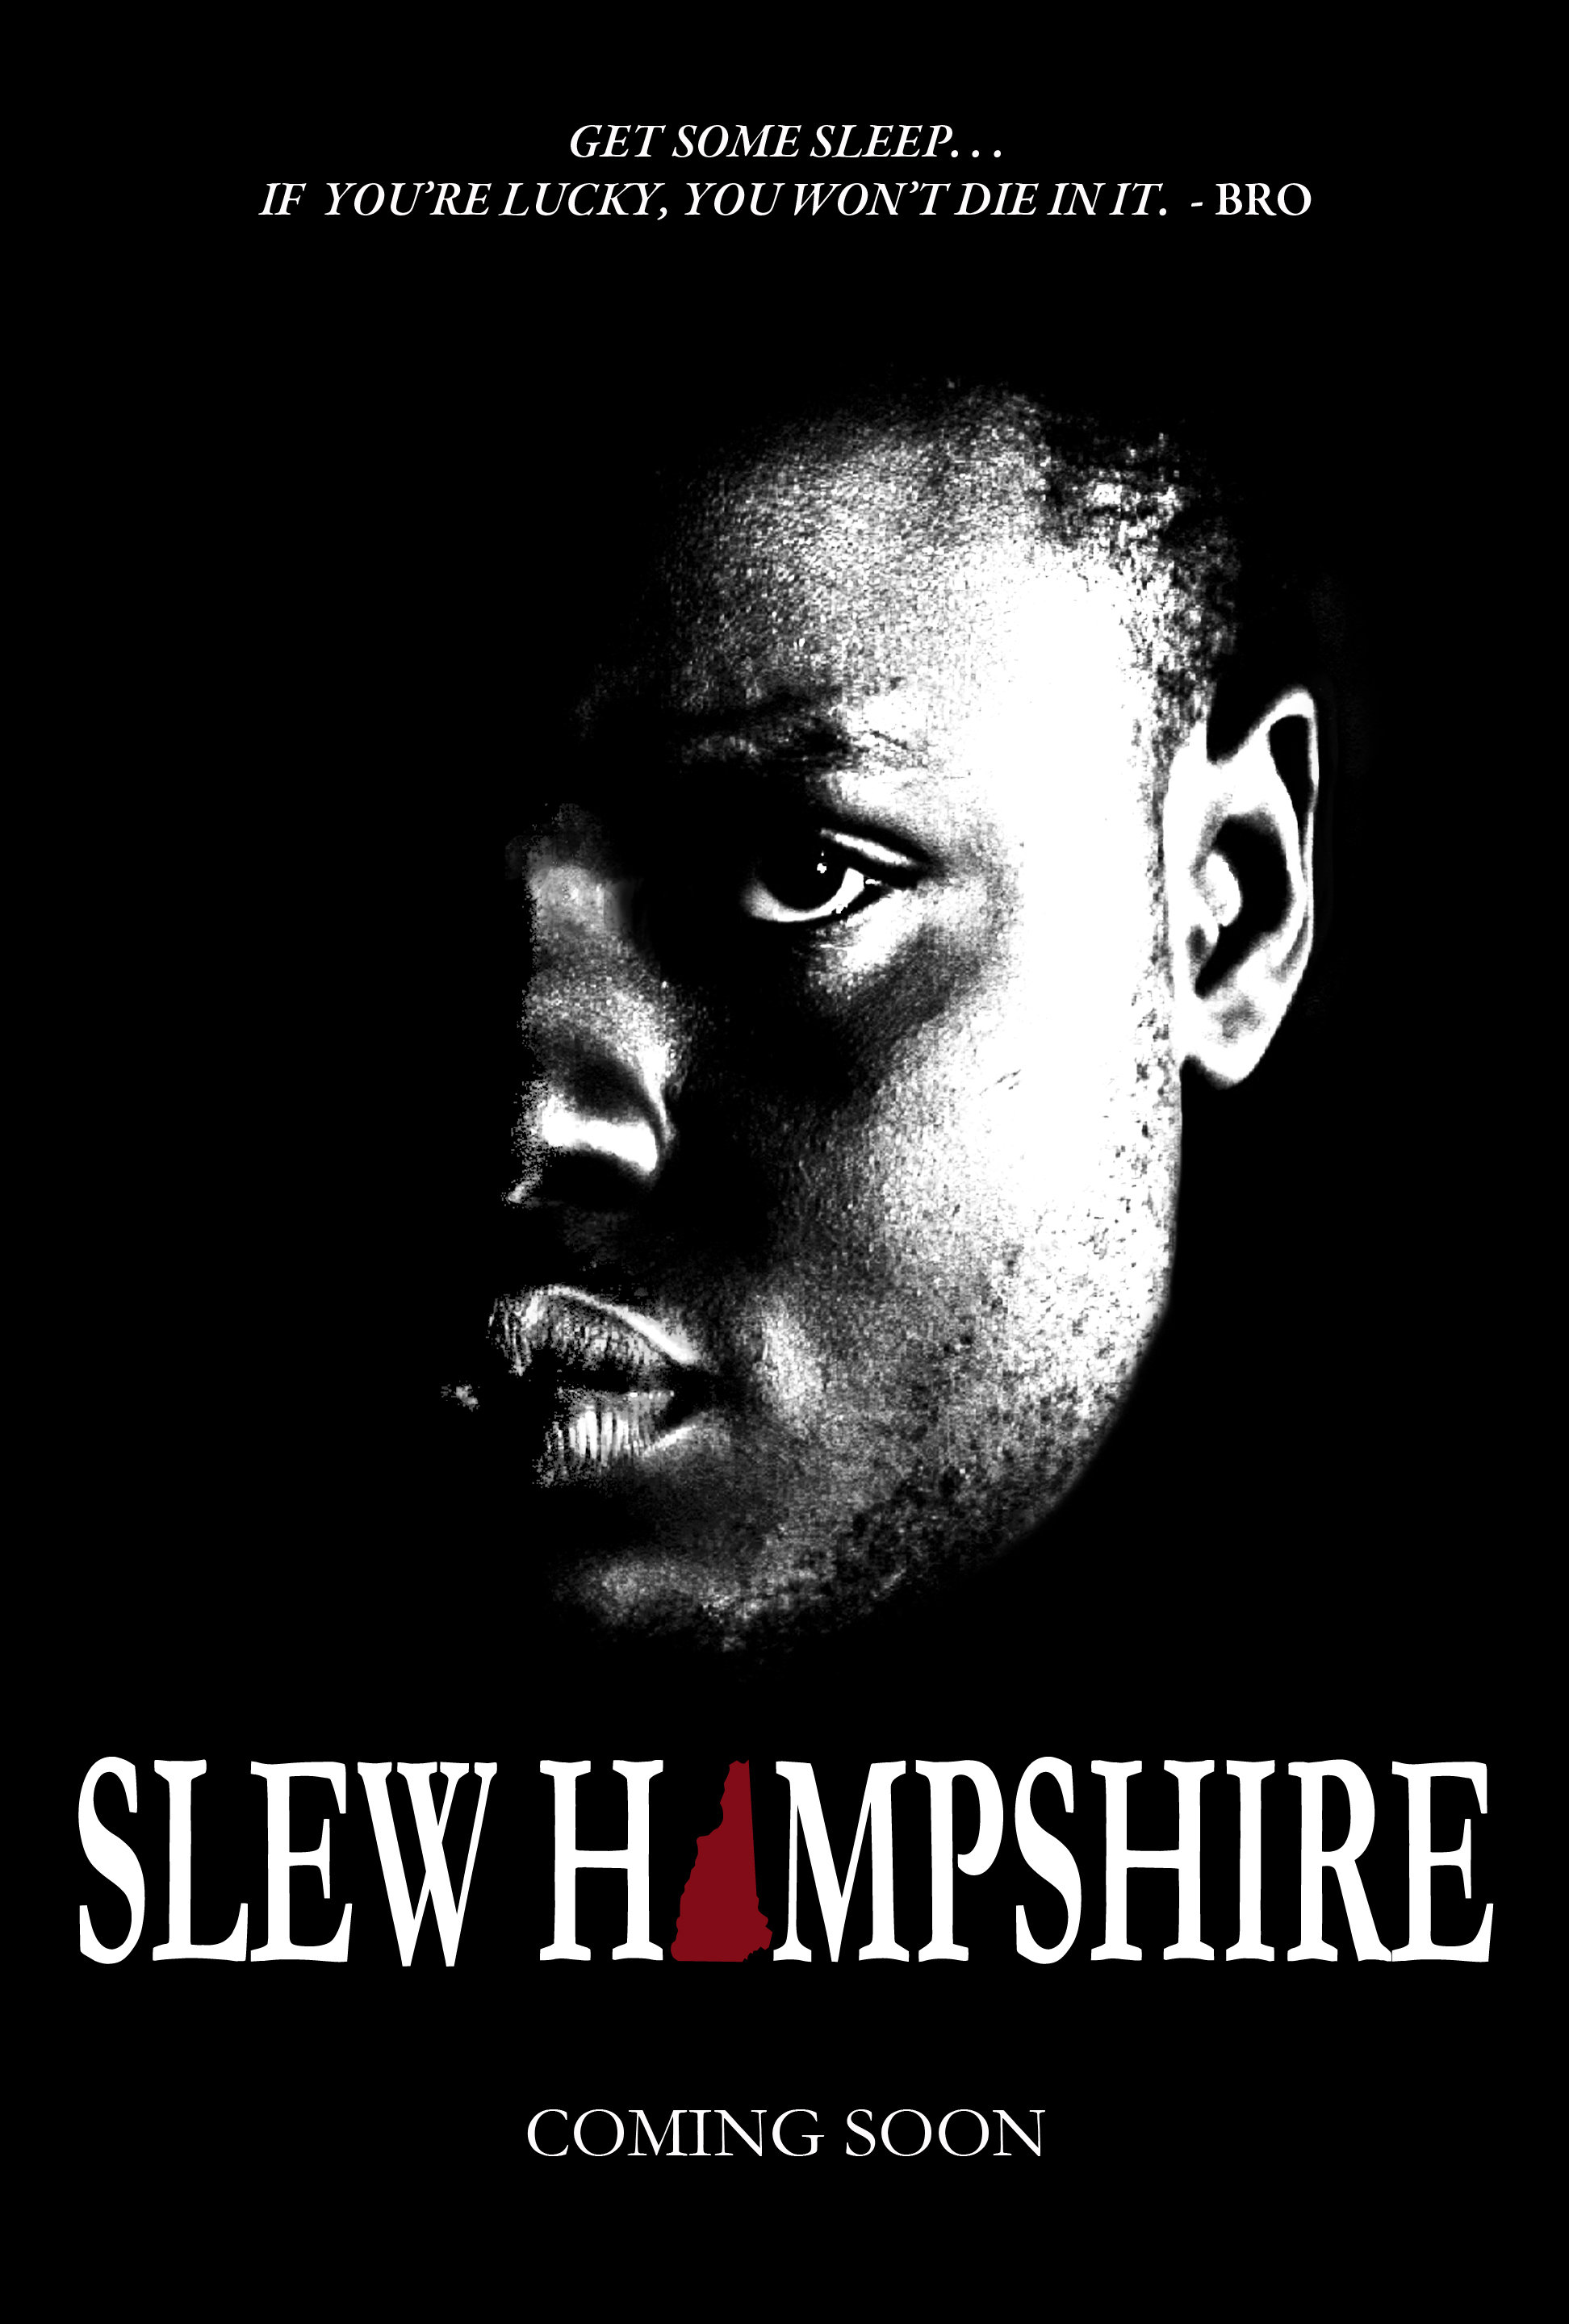 Dayo Okeniyi stars as Bro in Slew Hampshire (poster art by Eric Kruk).